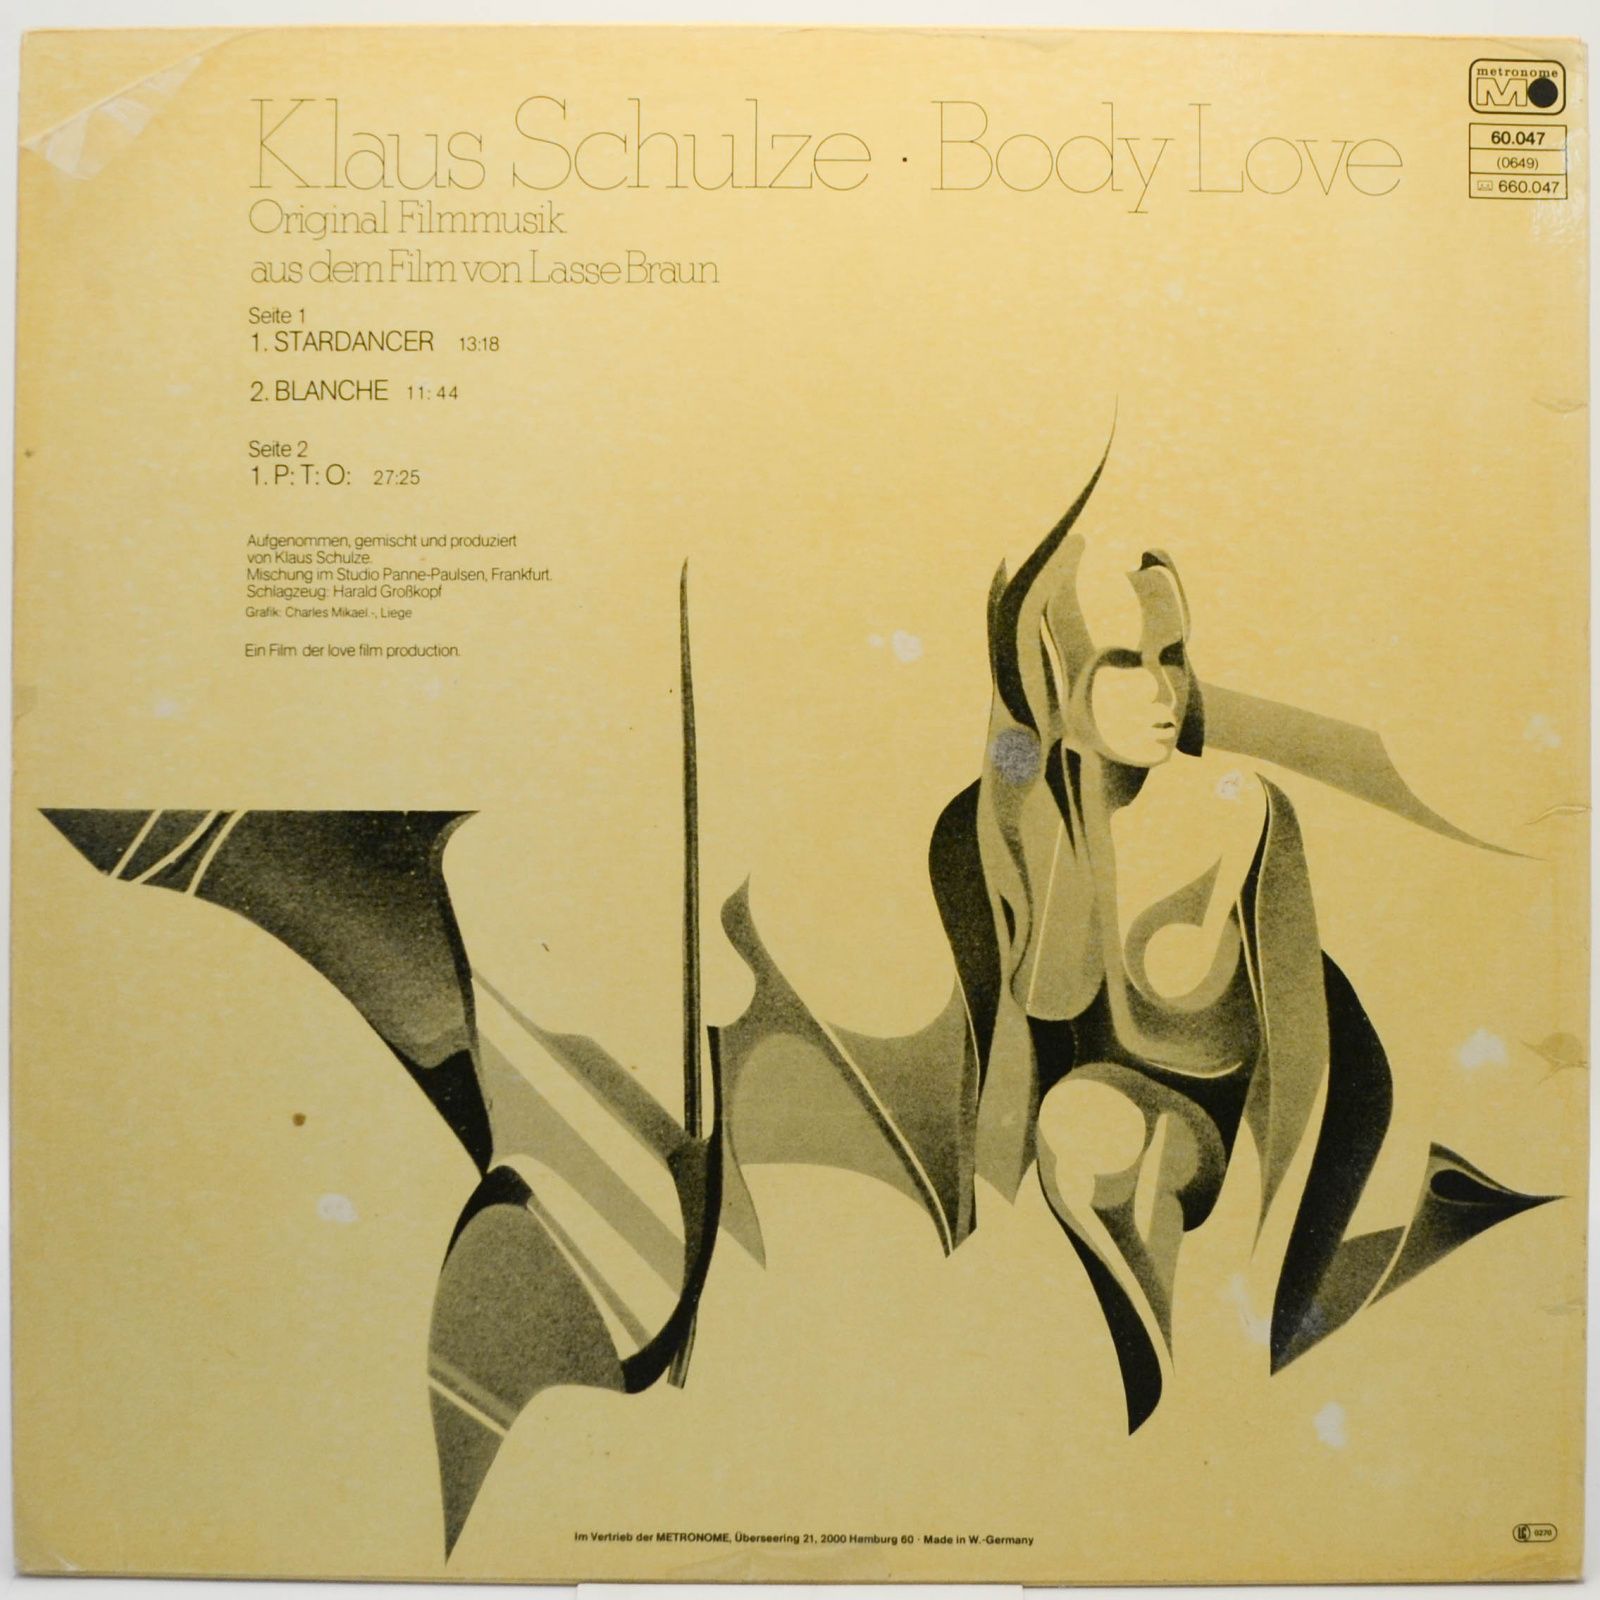 Klaus Schulze — Body Love, 1977